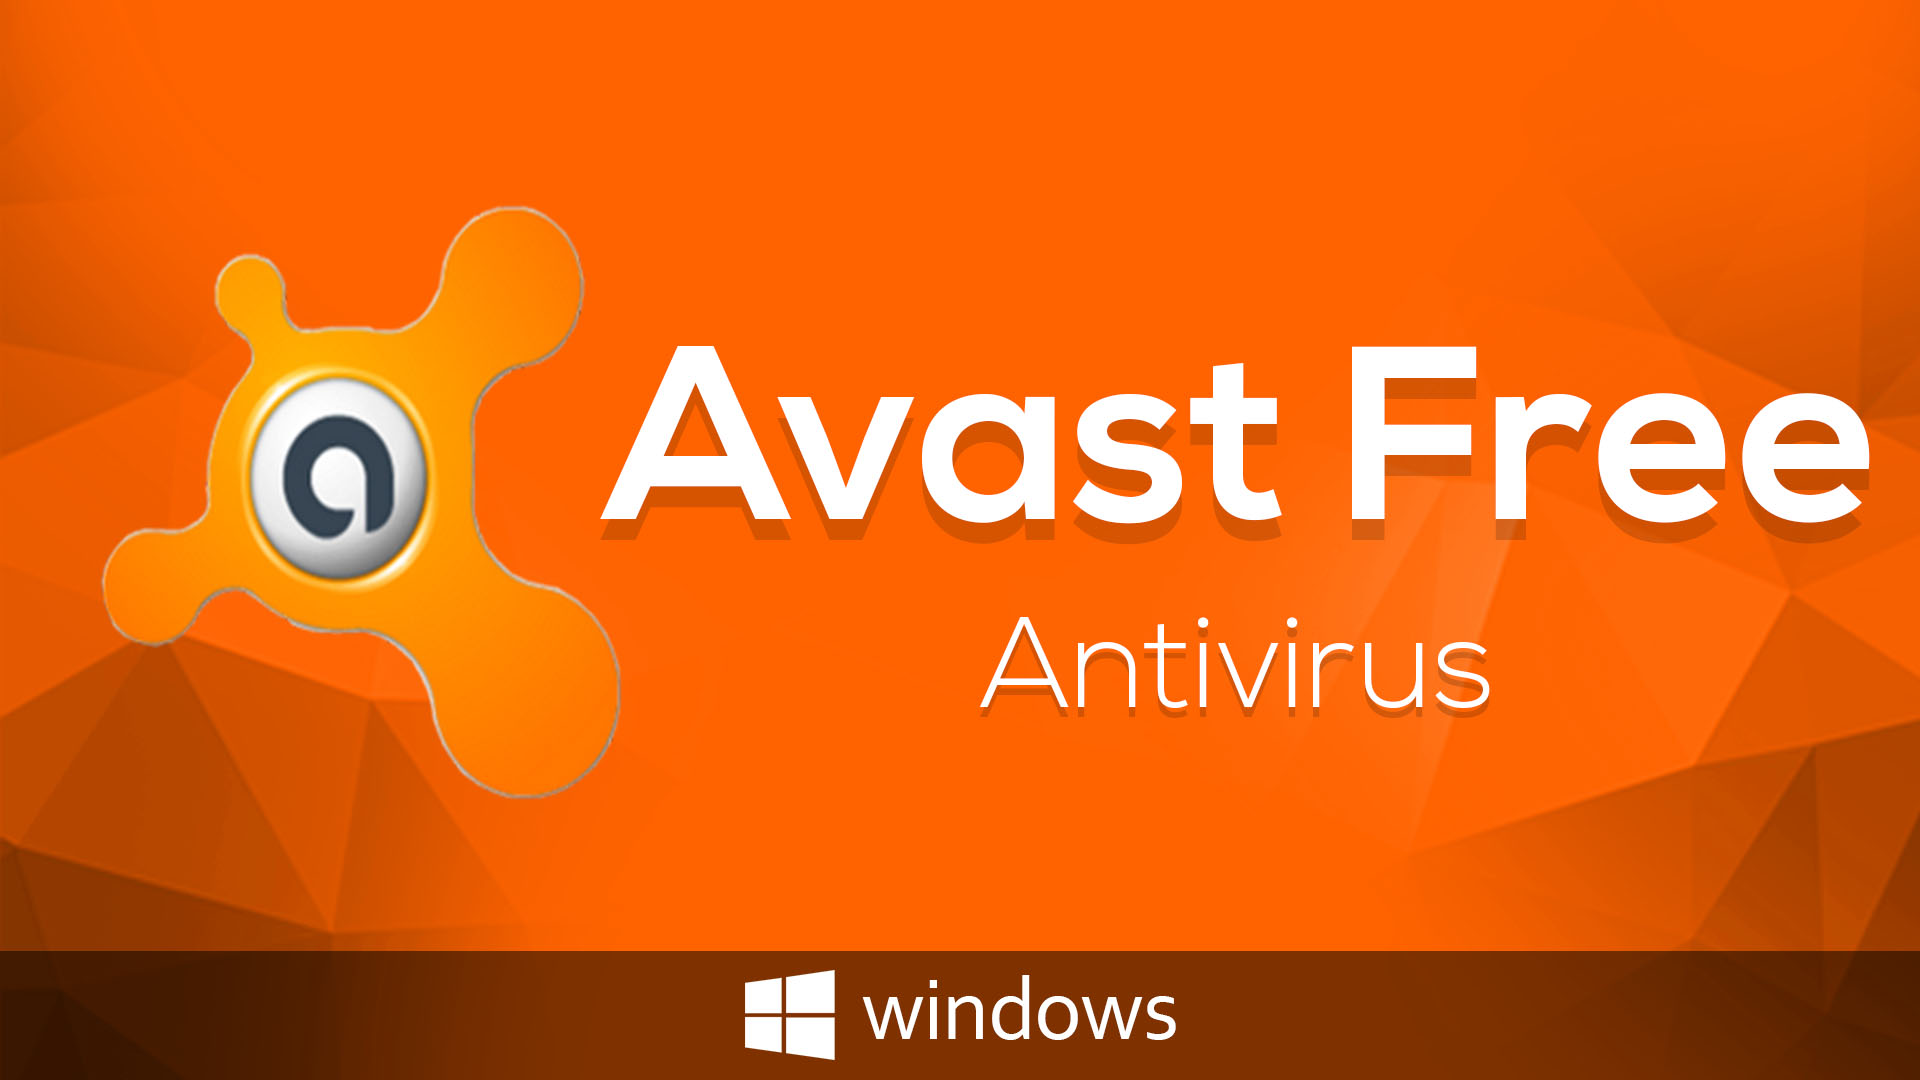 antivirus software reviews 2012 free download